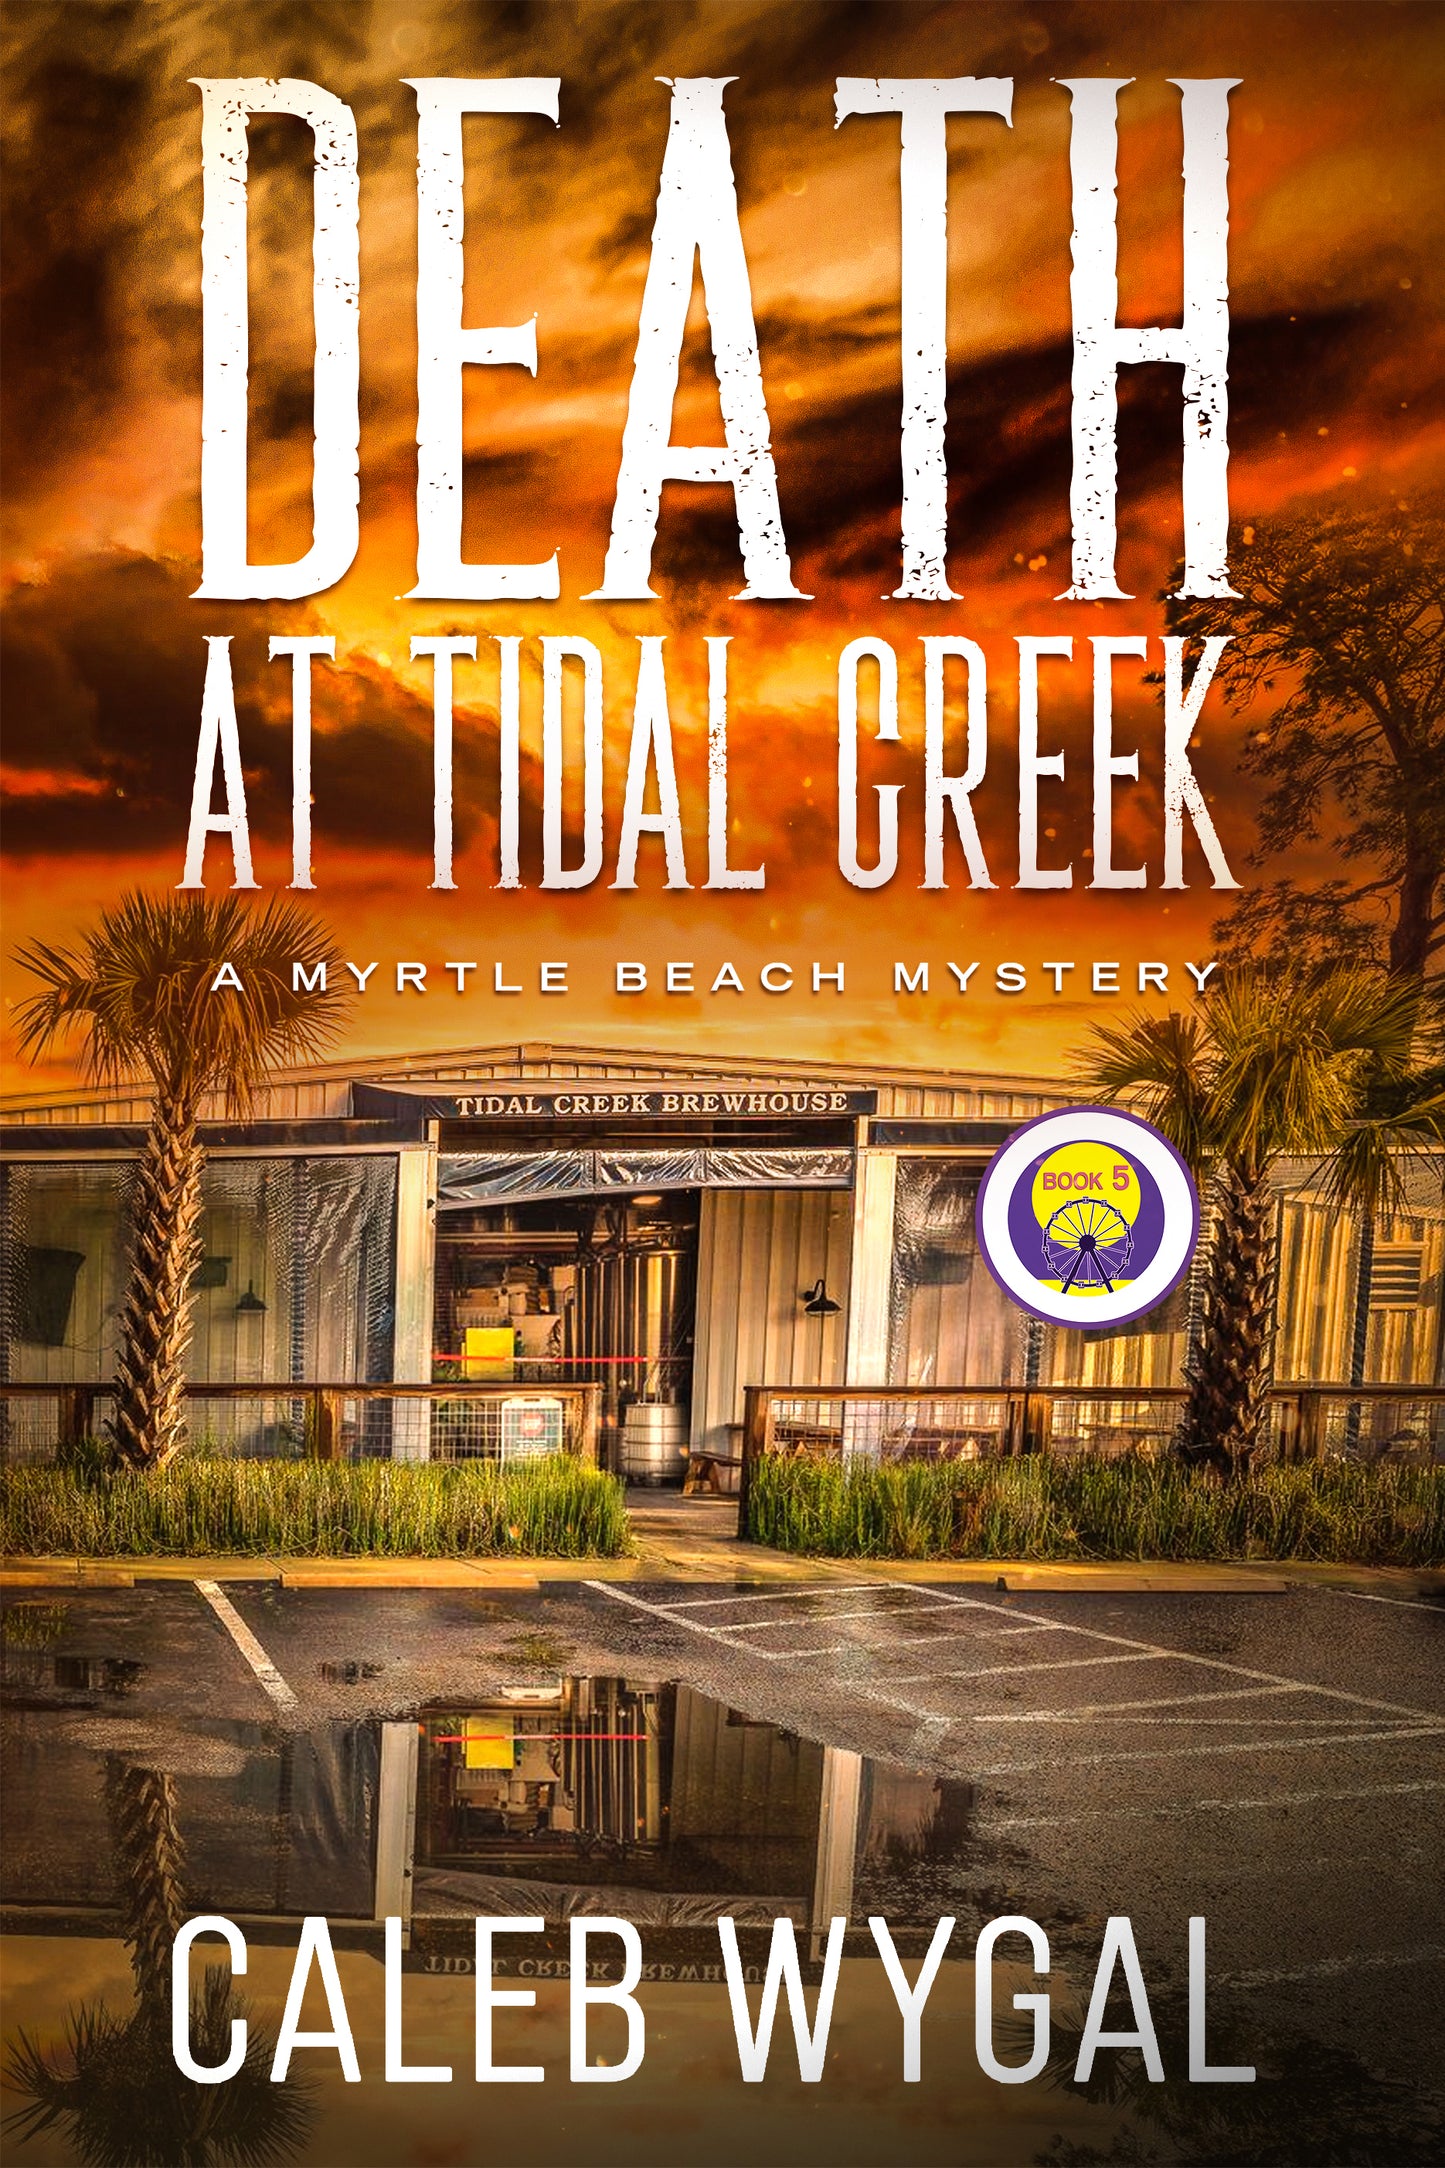 Myrtle Beach Mysteries Book 5: Death at Tidal Creek